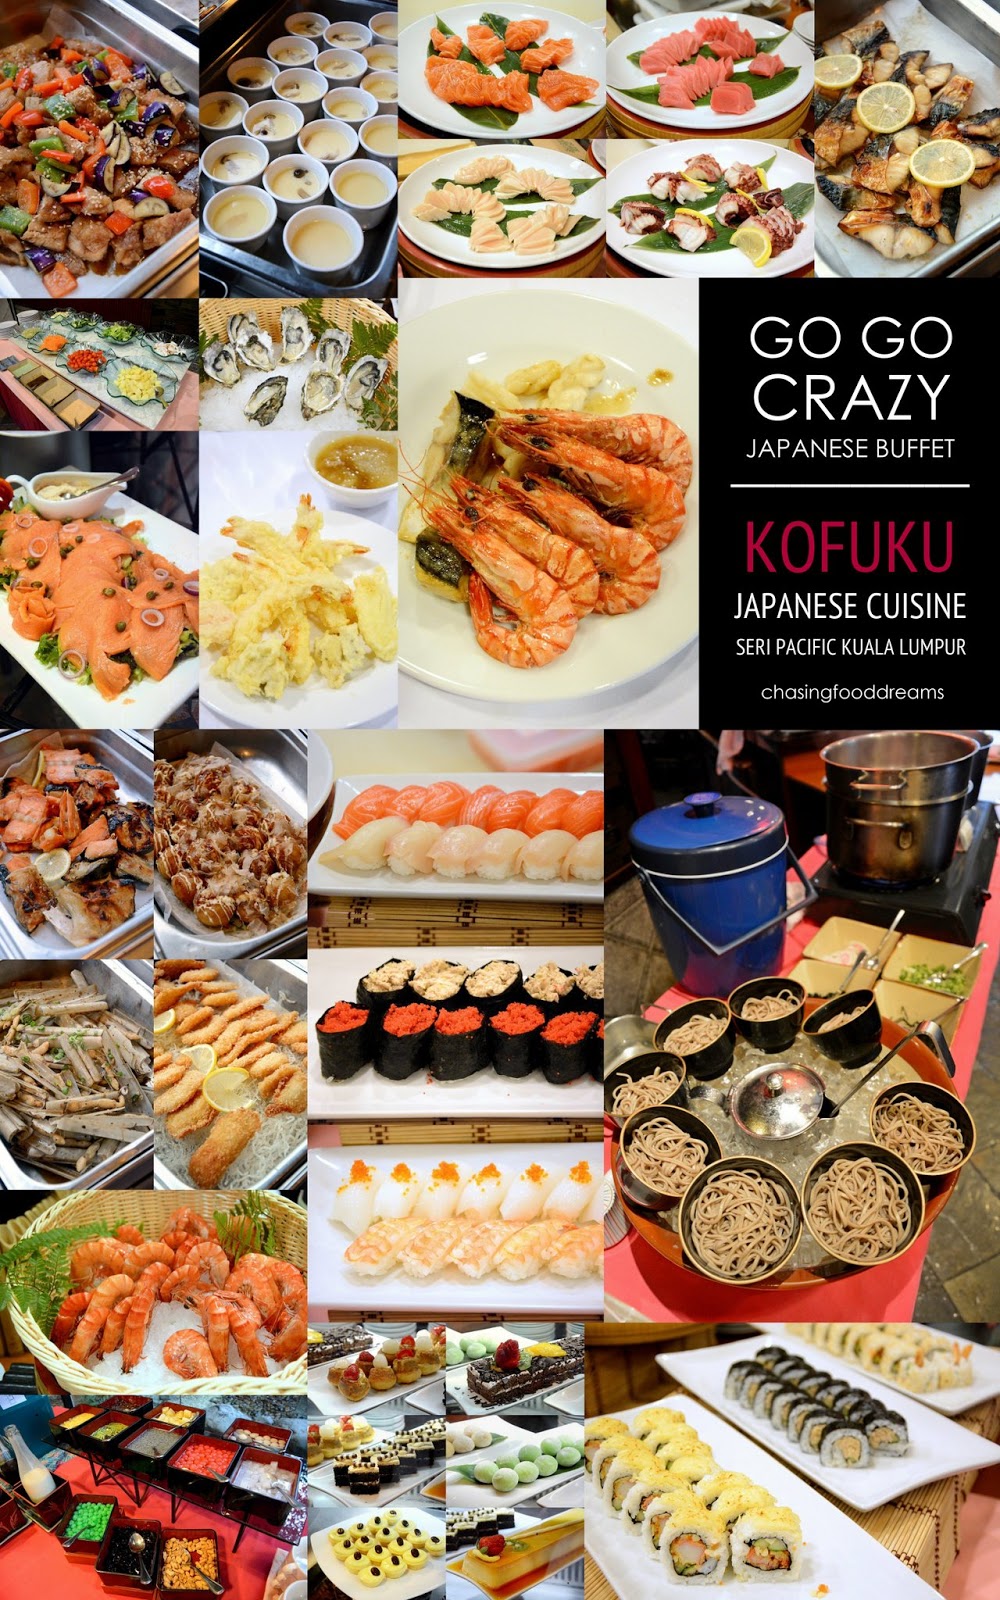 Chasing Food Dreams Kofuku Japanese Cuisine Seri Pacific Hotel Kuala Lumpur Go Go Crazy Buffet Promotion